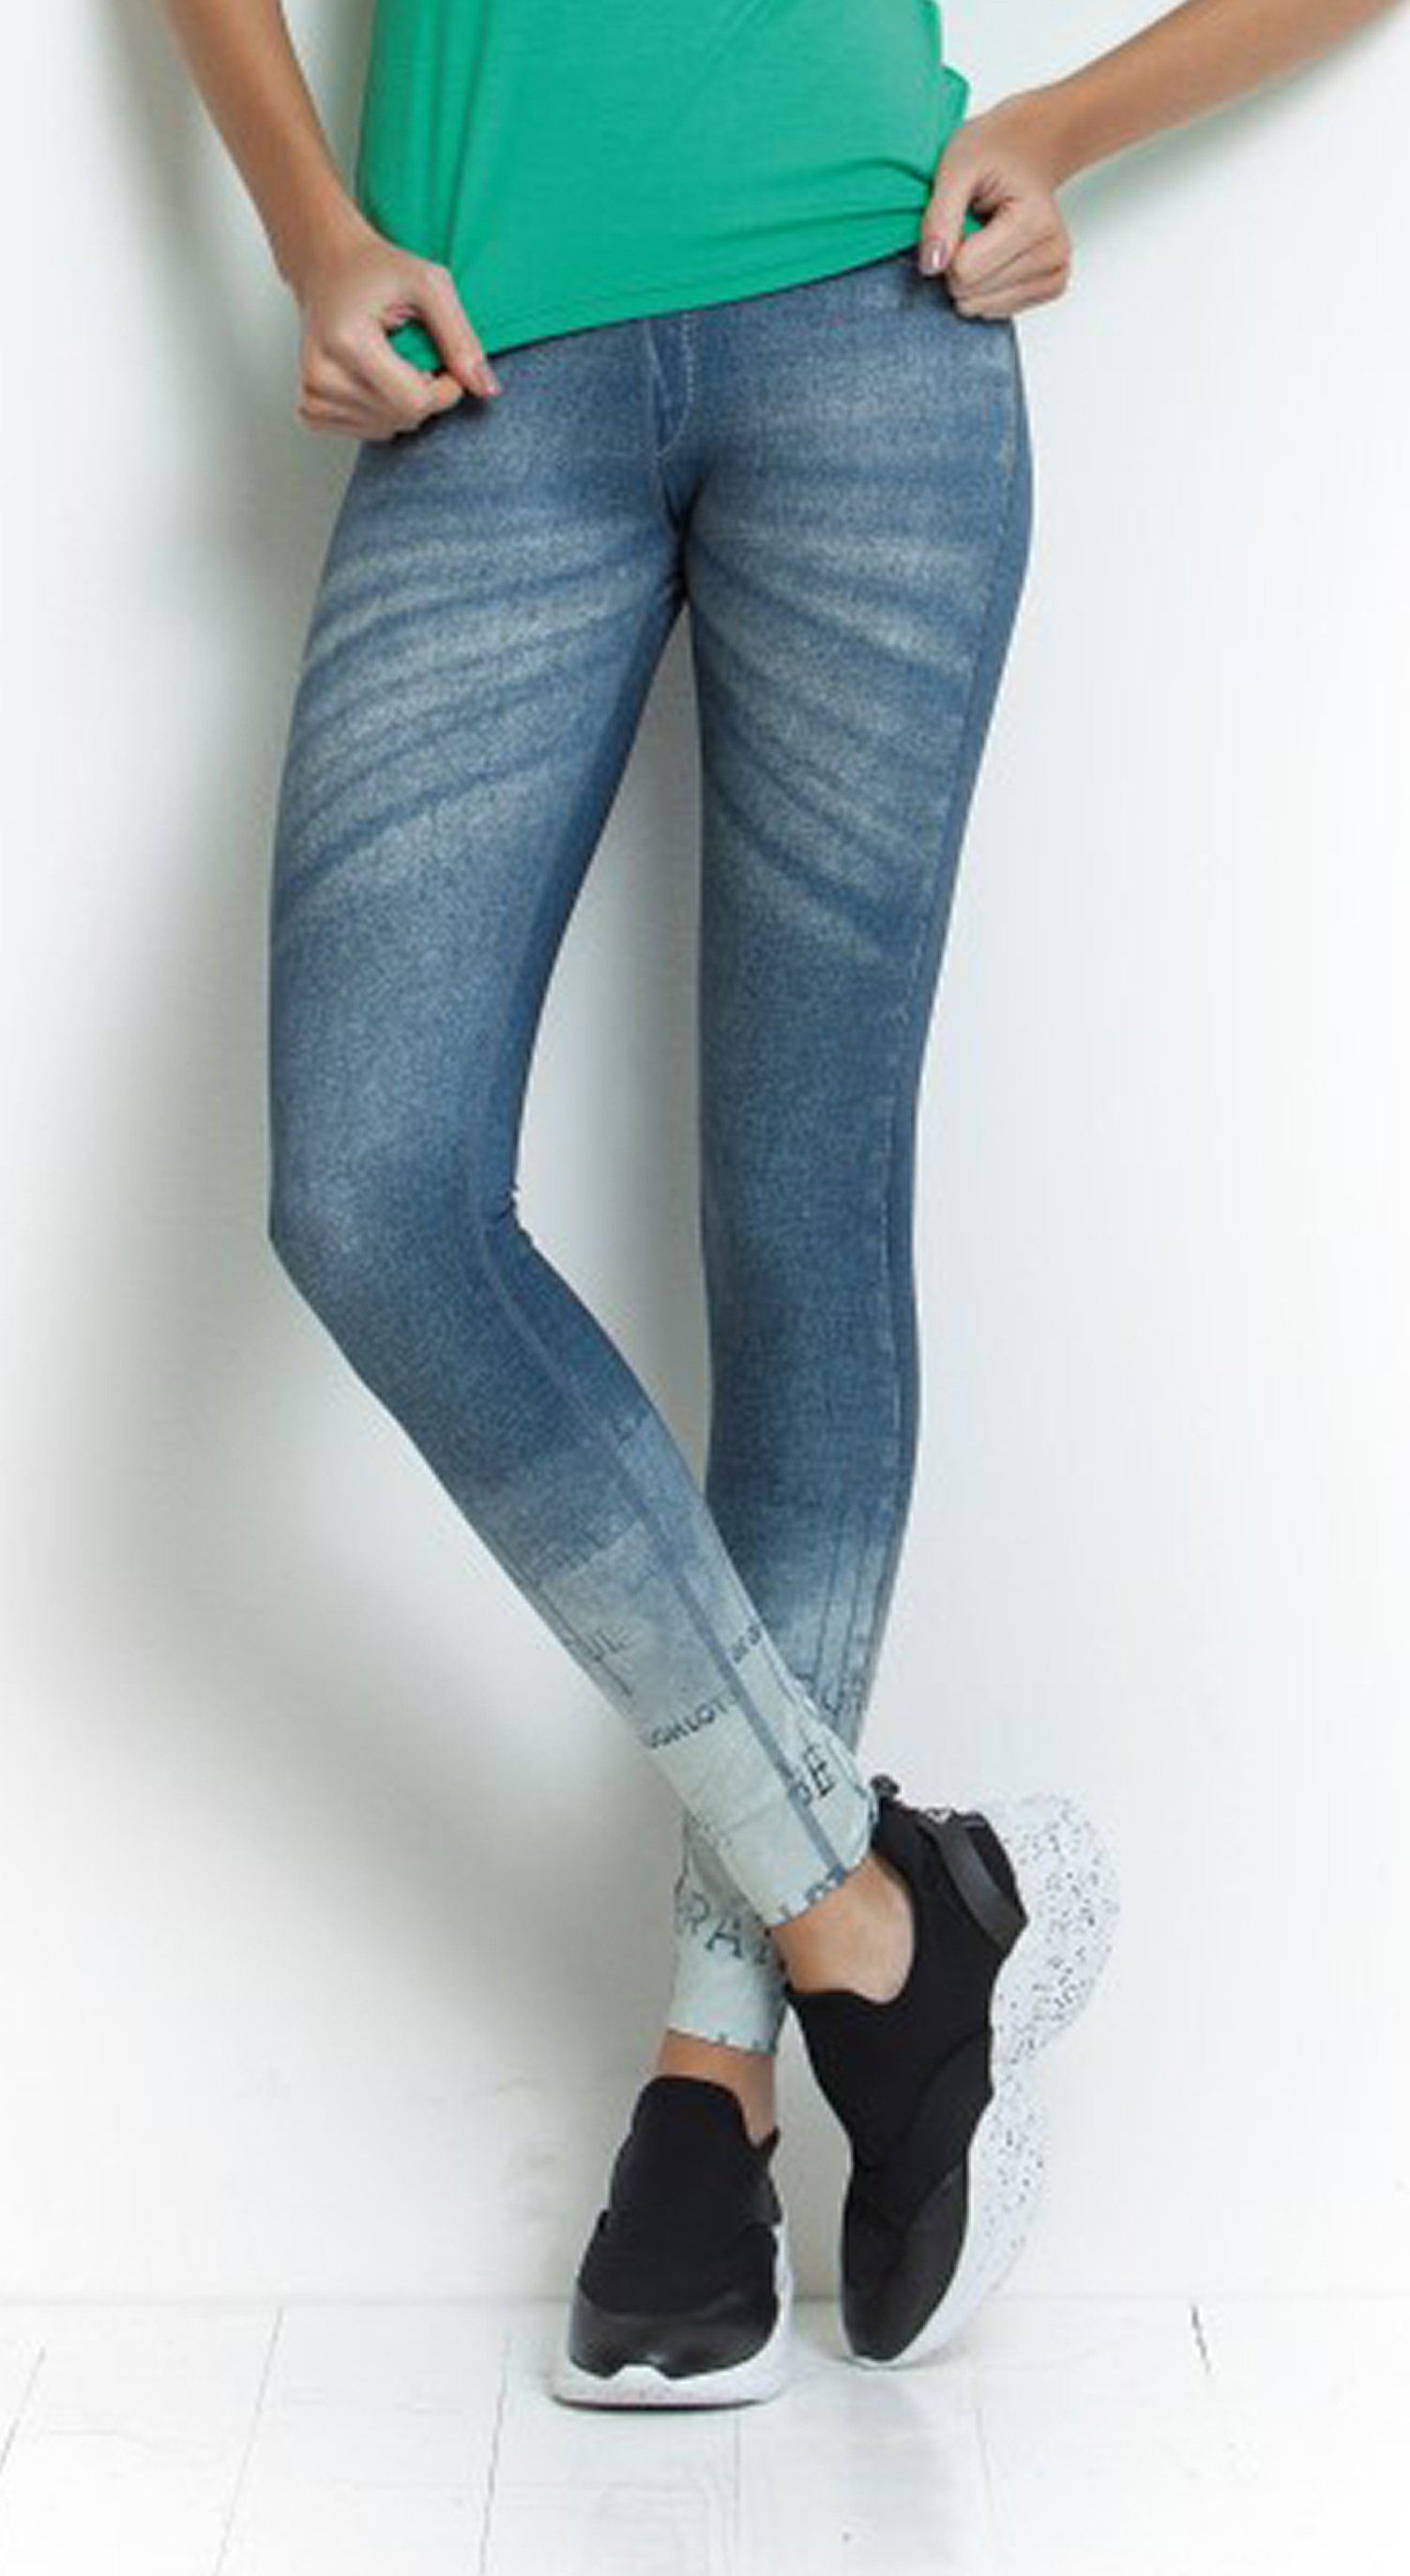 Brazilian Fake Jeans | Sublime Top Print Rio Shop Reversible | Legging Grateful